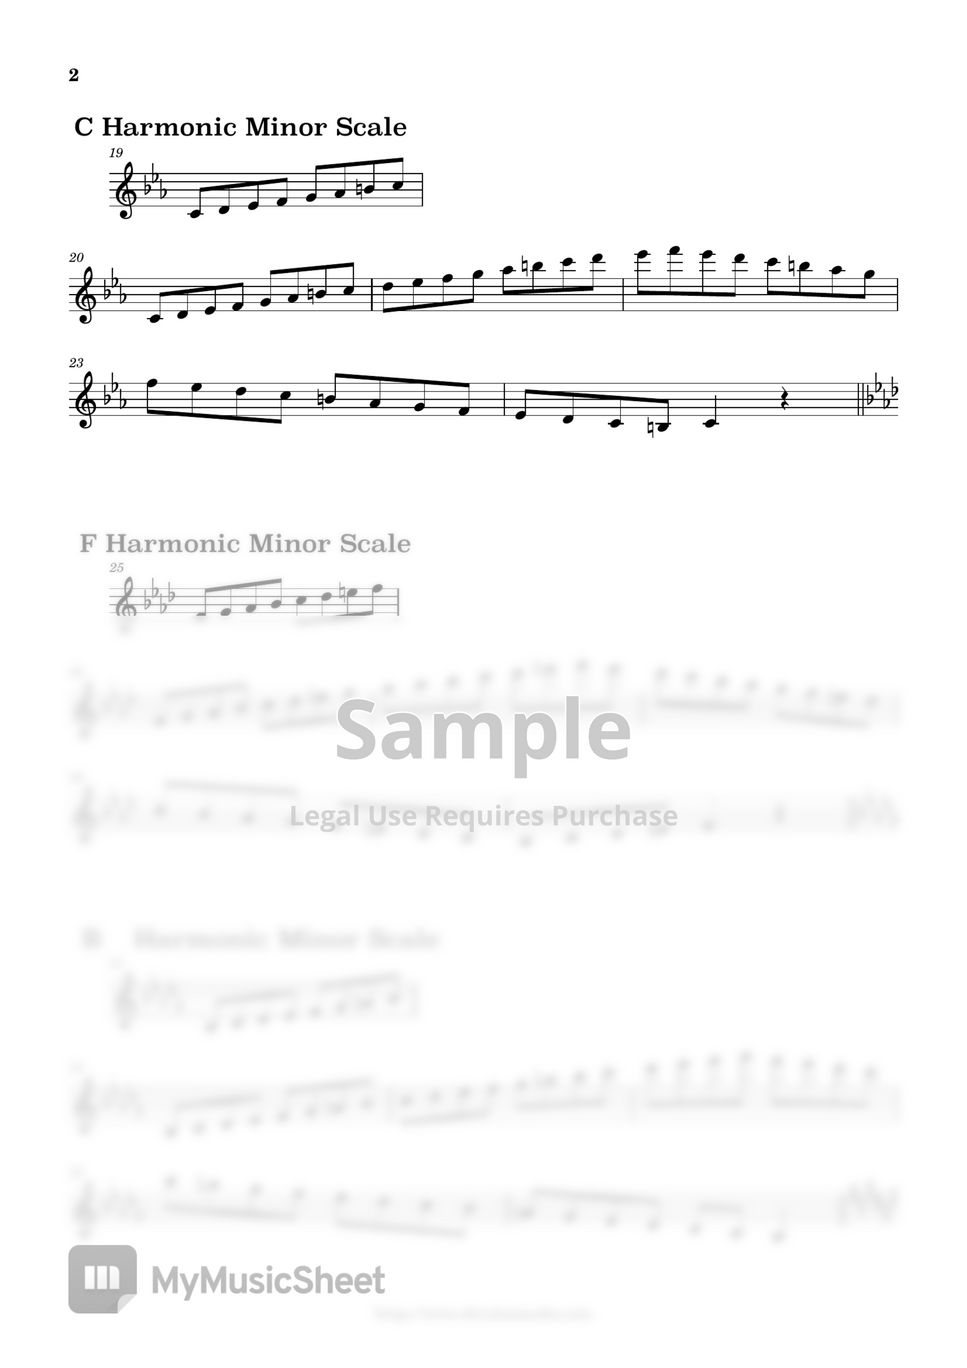 syzkah - Basic practice of Harmonic Minor scale【Alto/Tenor】 (sax/harmonicminorscale)